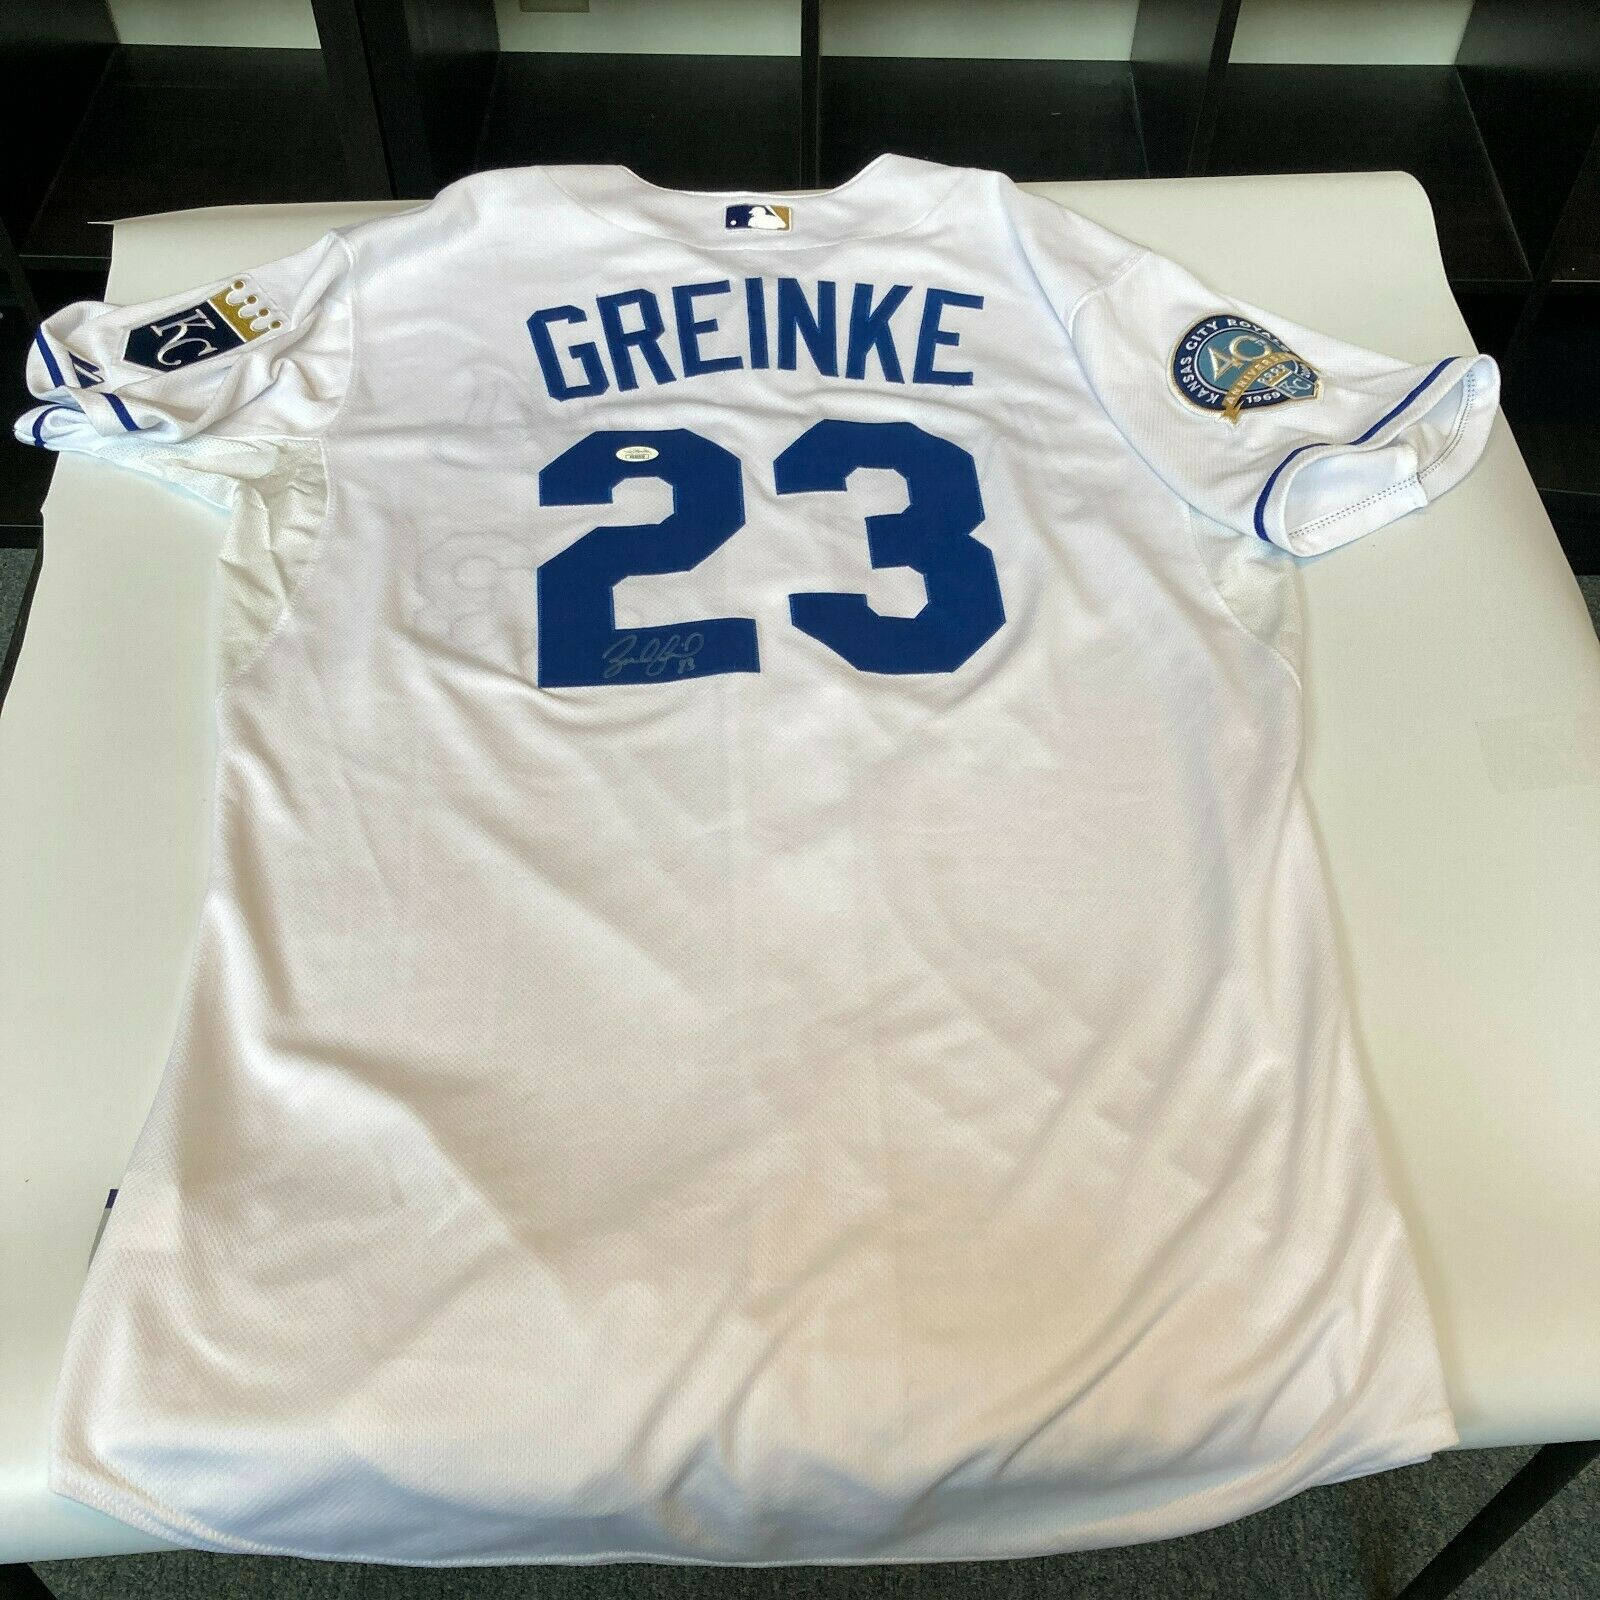 2009 Zack Greinke Kansas City Royals Game Used & Autographed Home